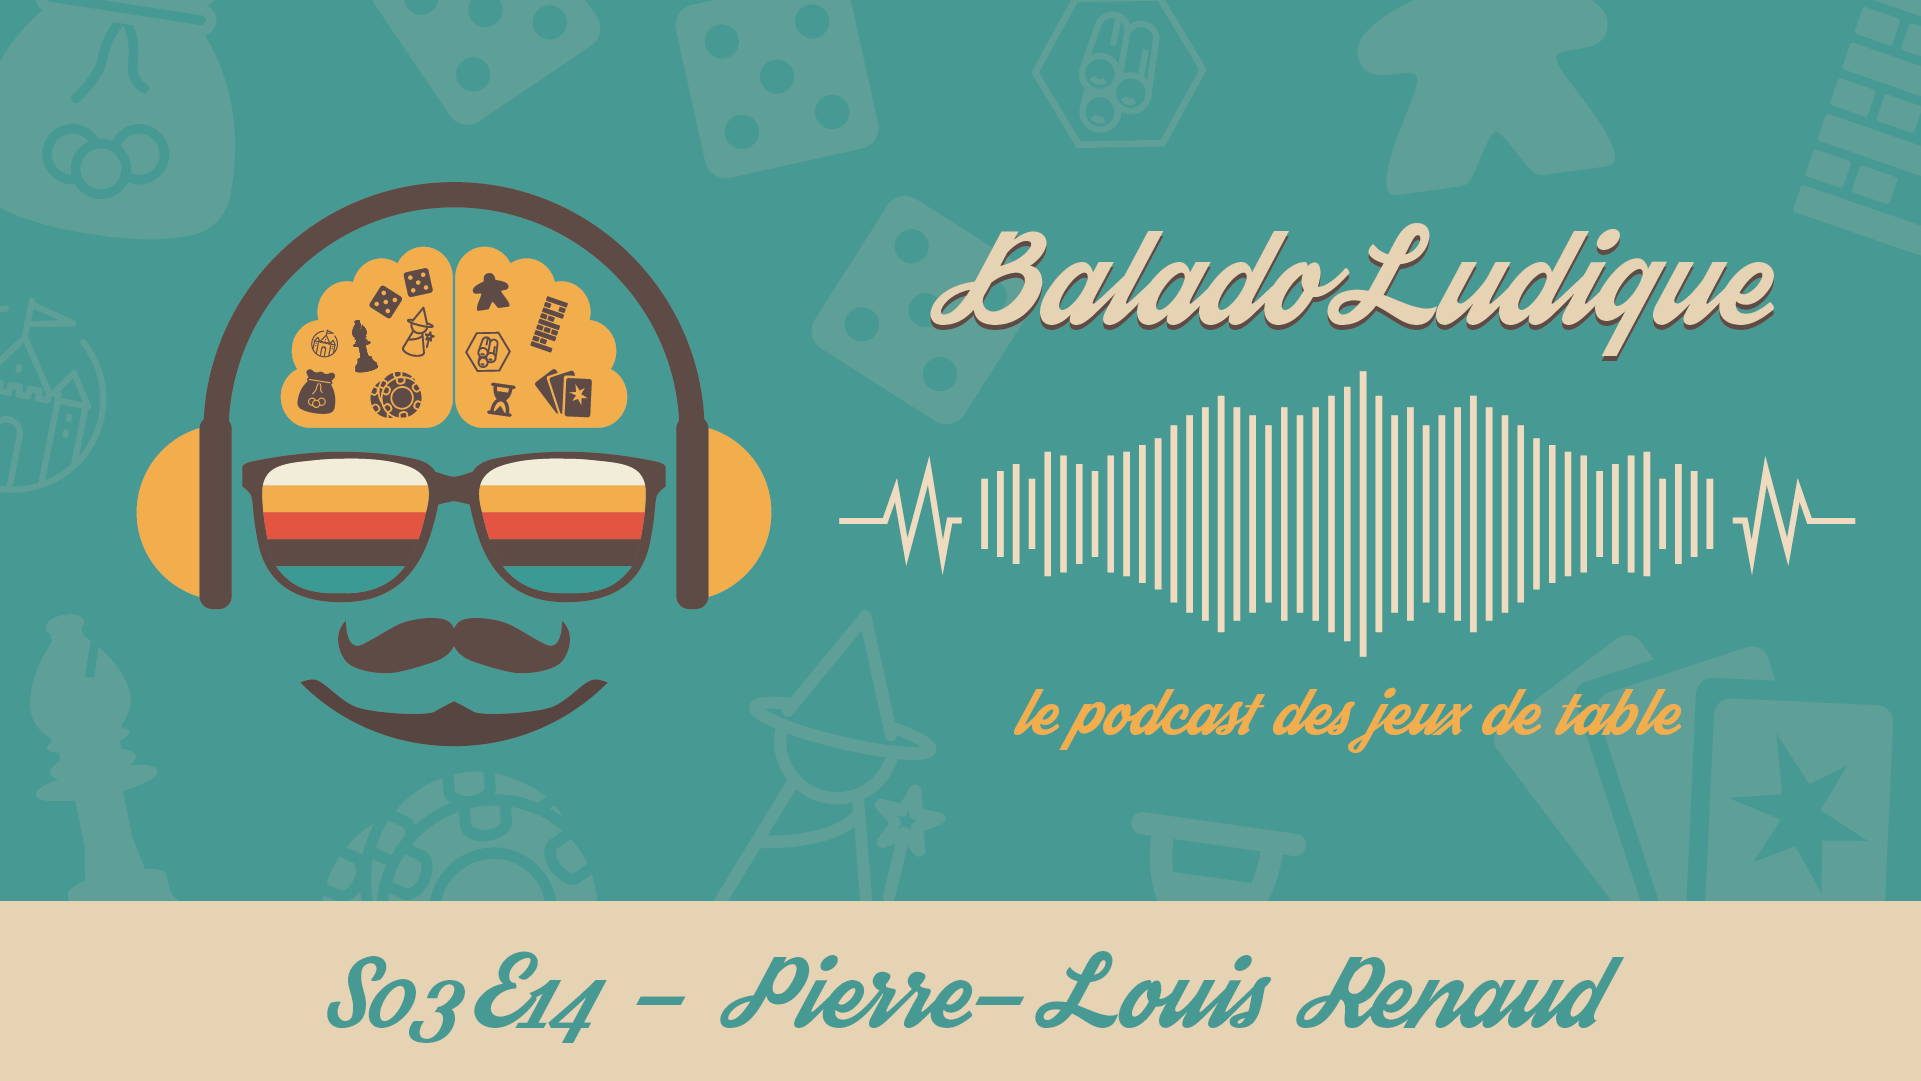 Pierre-Louis Renaud - BaladoLudique - s03-e14